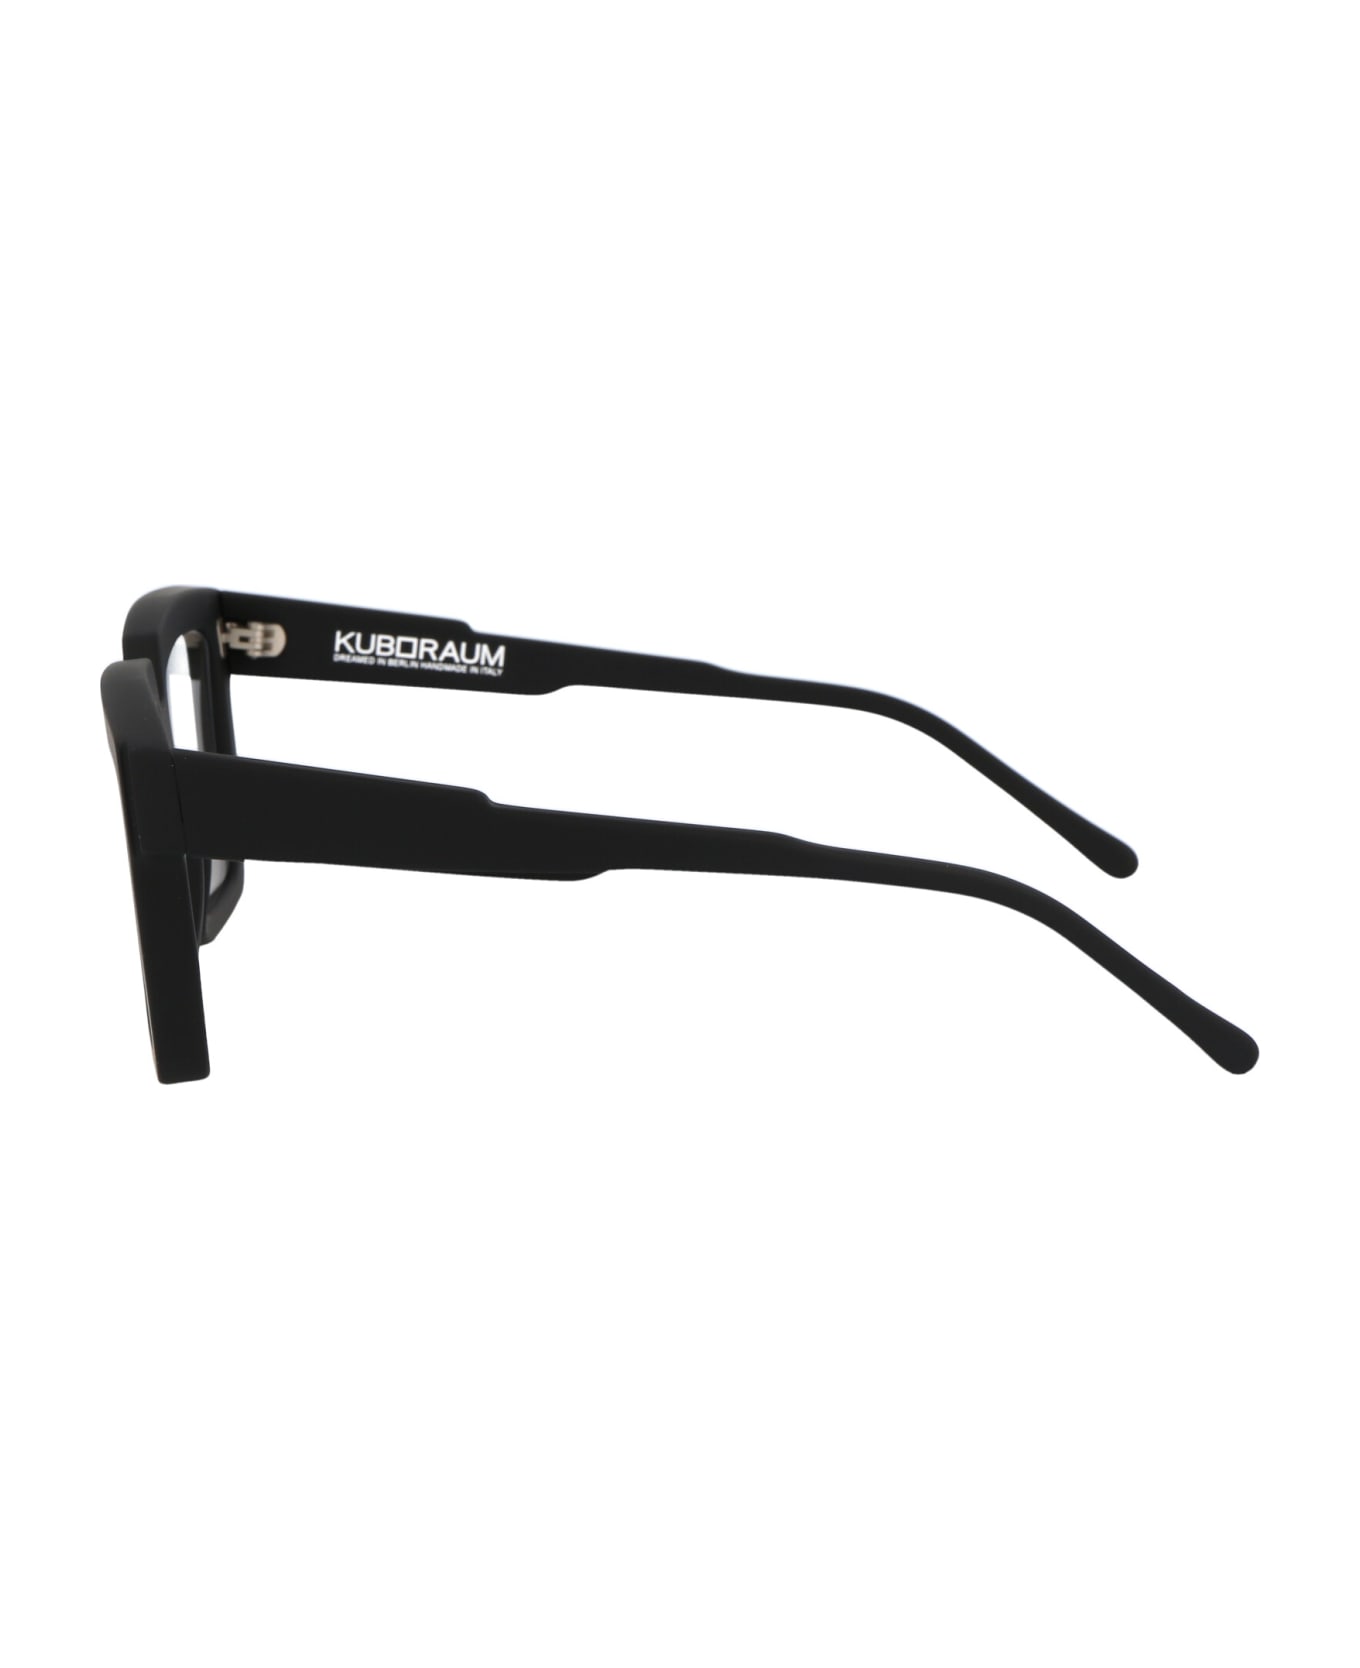 Kuboraum Maske K26 Glasses - BM black